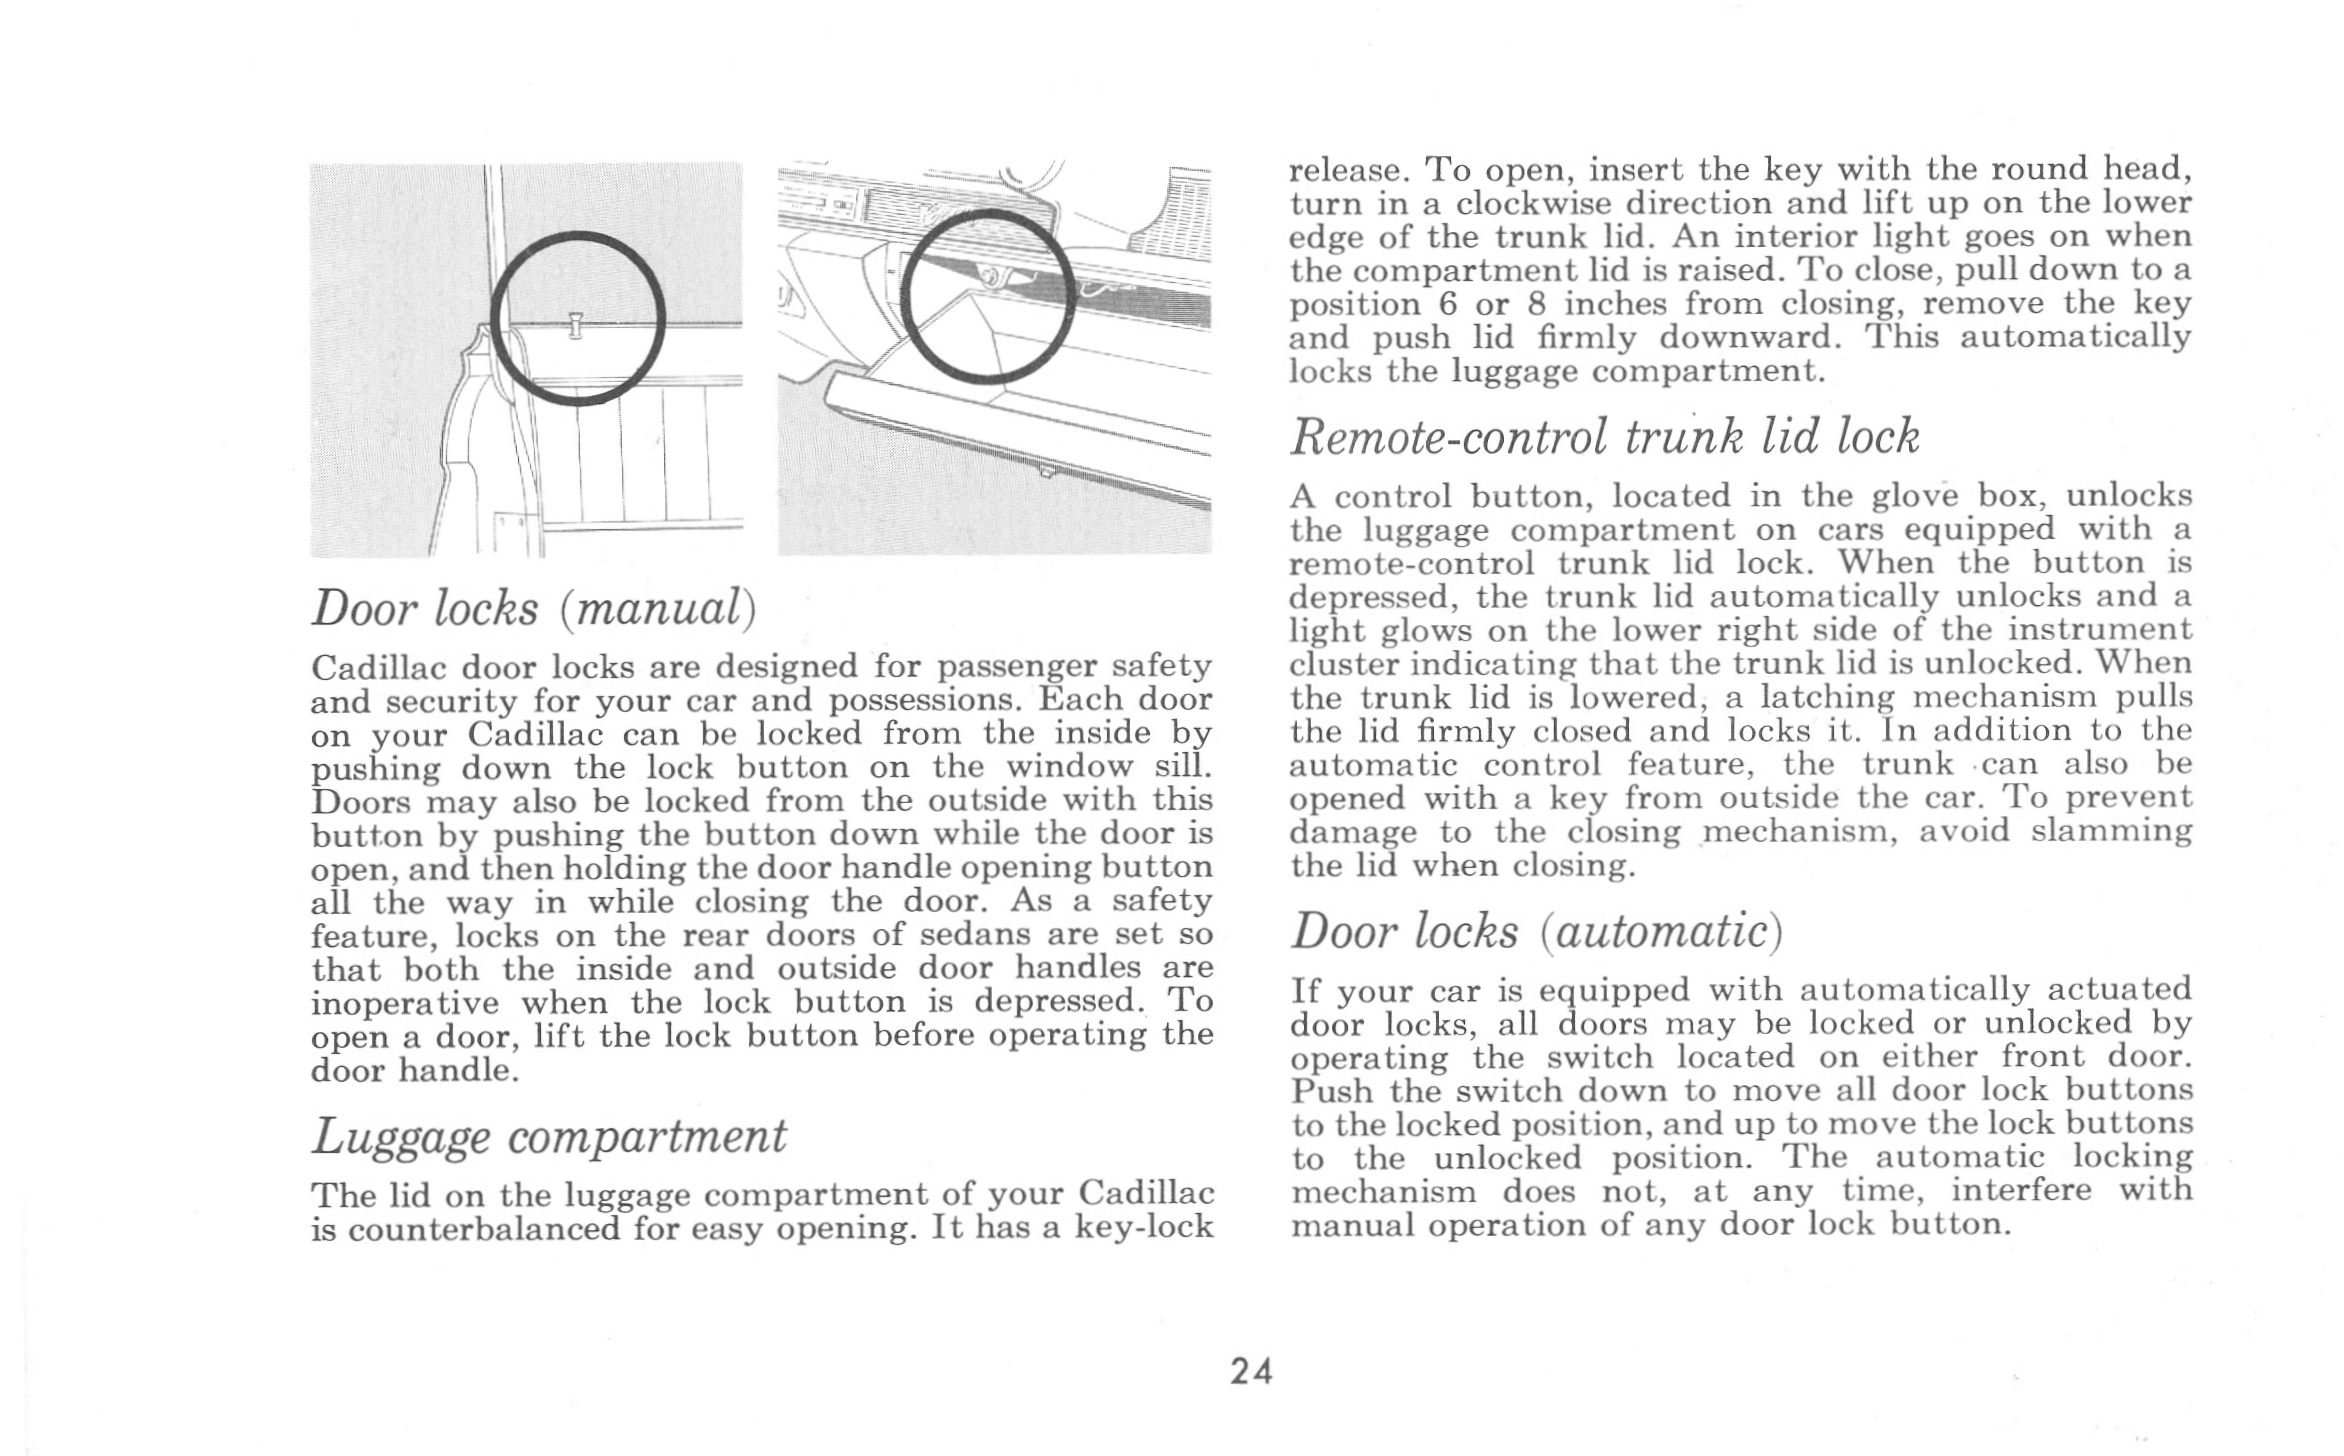 n_1962 Cadillac Owner's Manual-Page 24.jpg